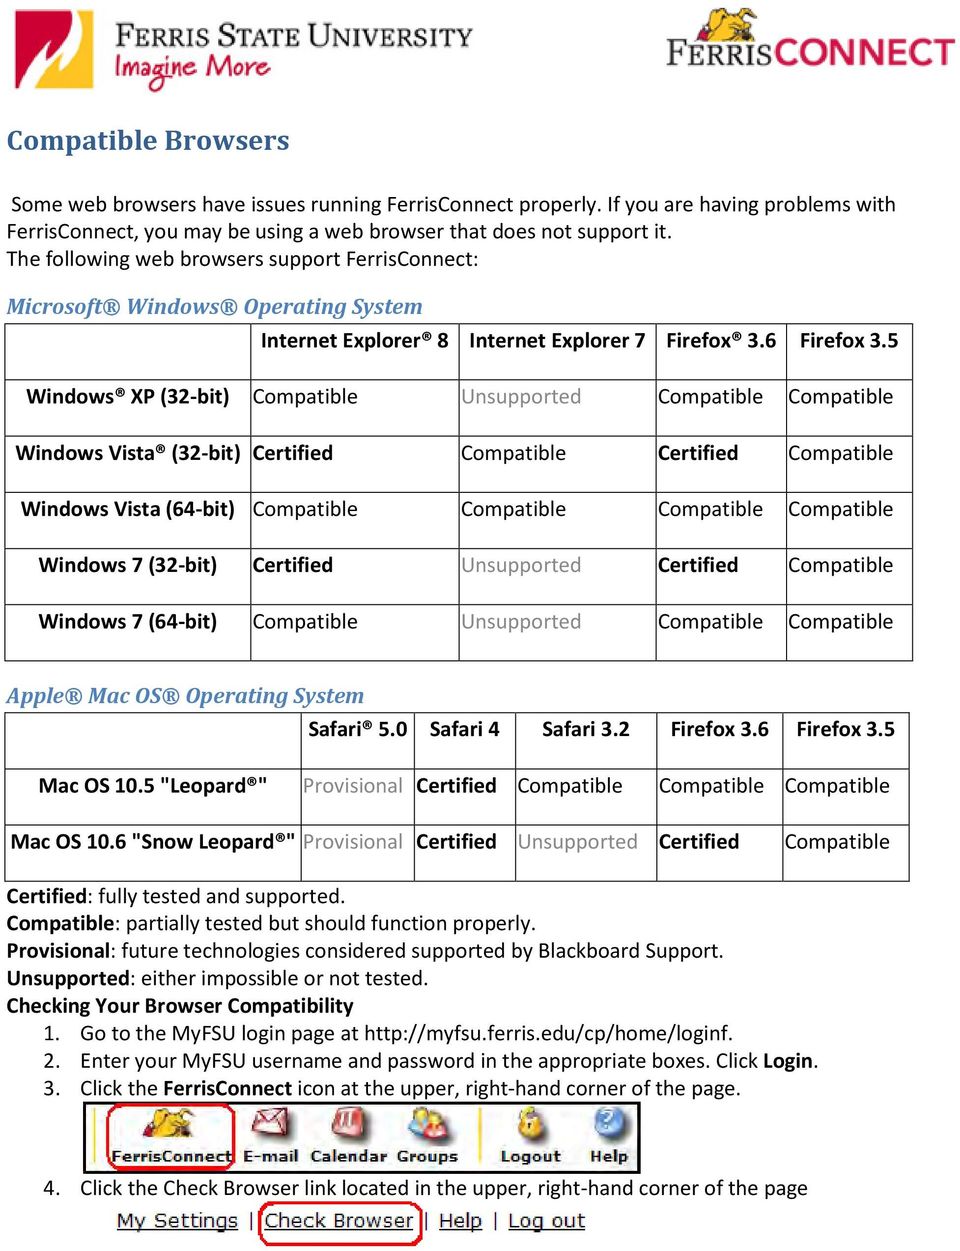 5 Windows XP (32-bit) Compatible Unsupported Compatible Compatible Windows Vista (32-bit) Certified Compatible Certified Compatible Windows Vista (64-bit) Compatible Compatible Compatible Compatible